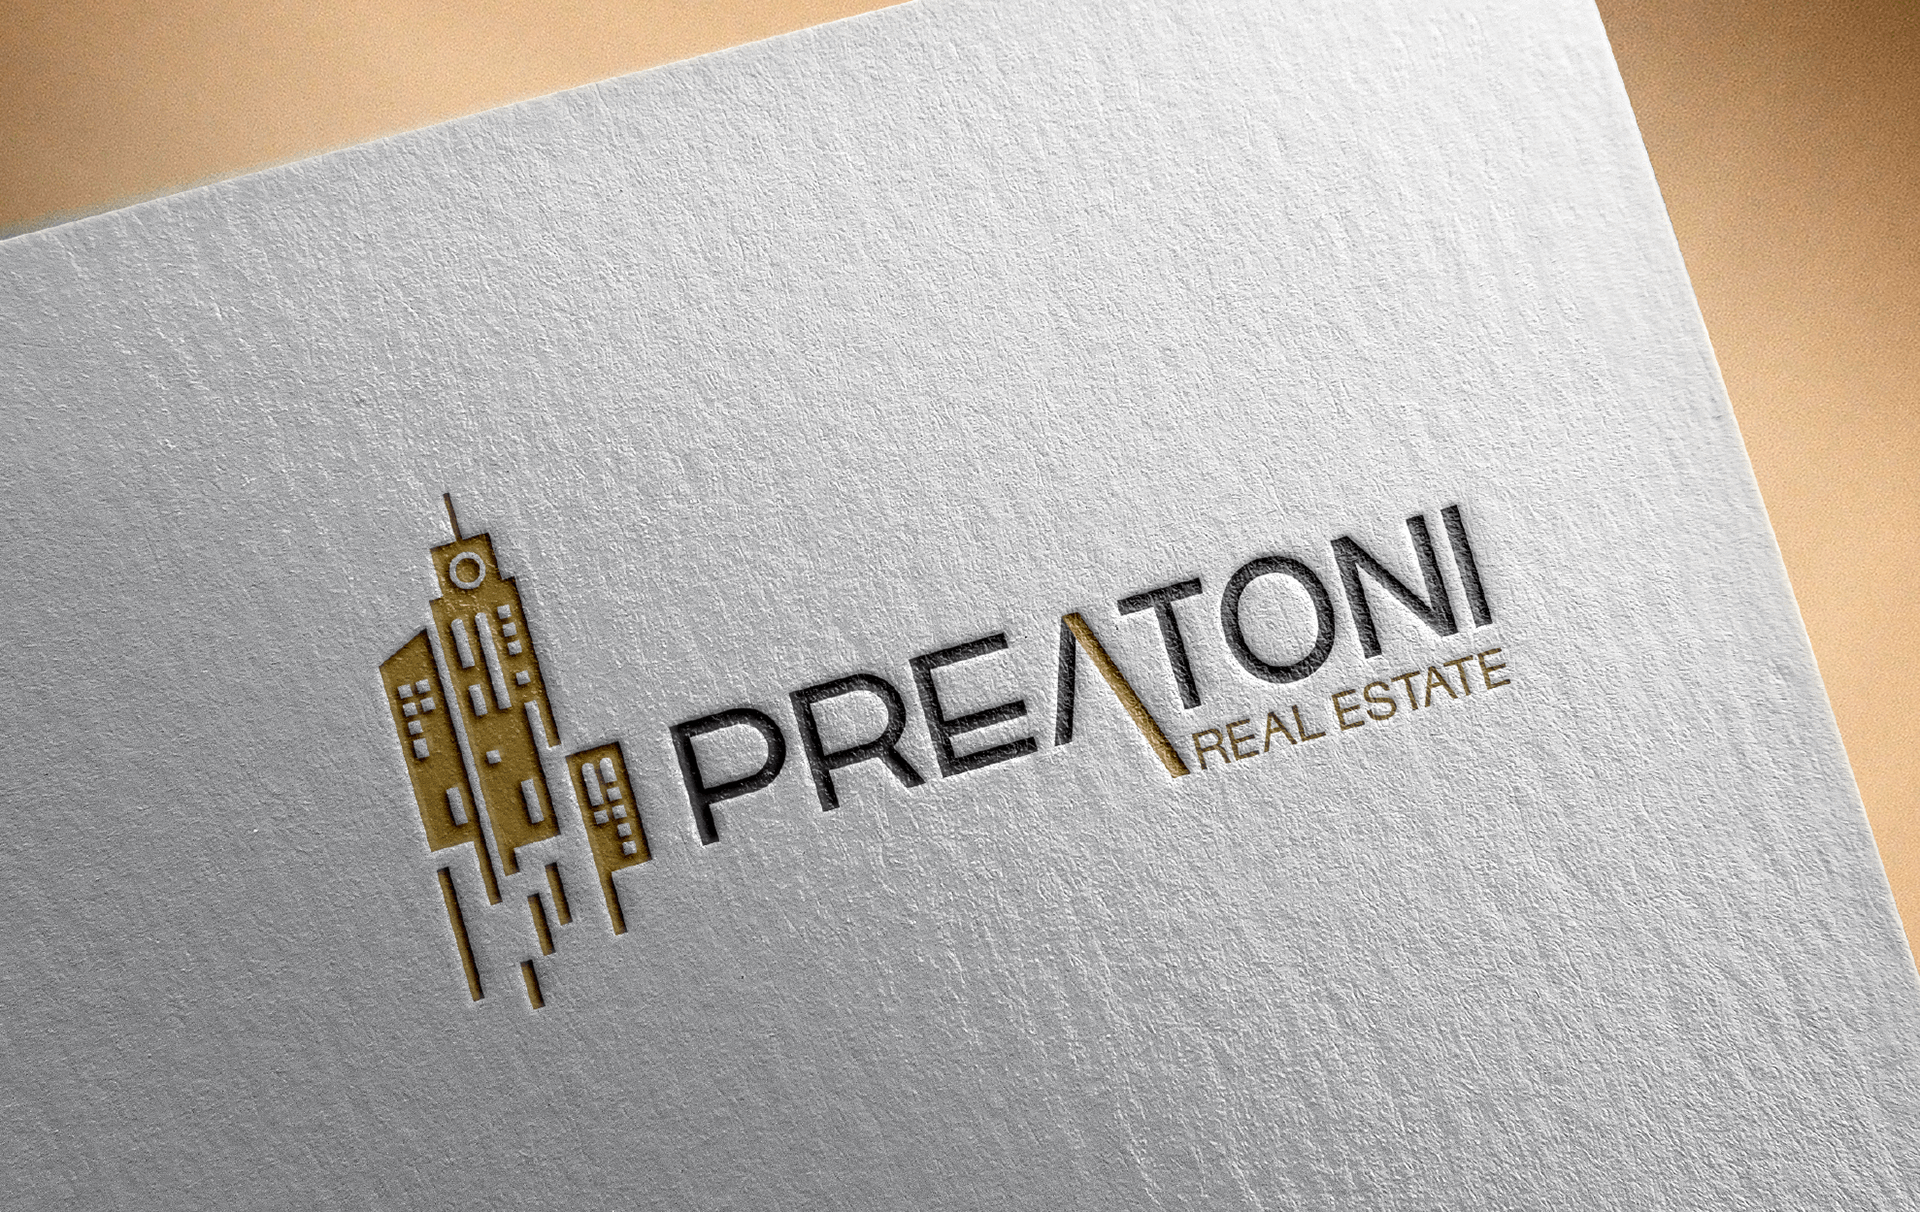 preatoni-real-estate_brandmark_letterpress